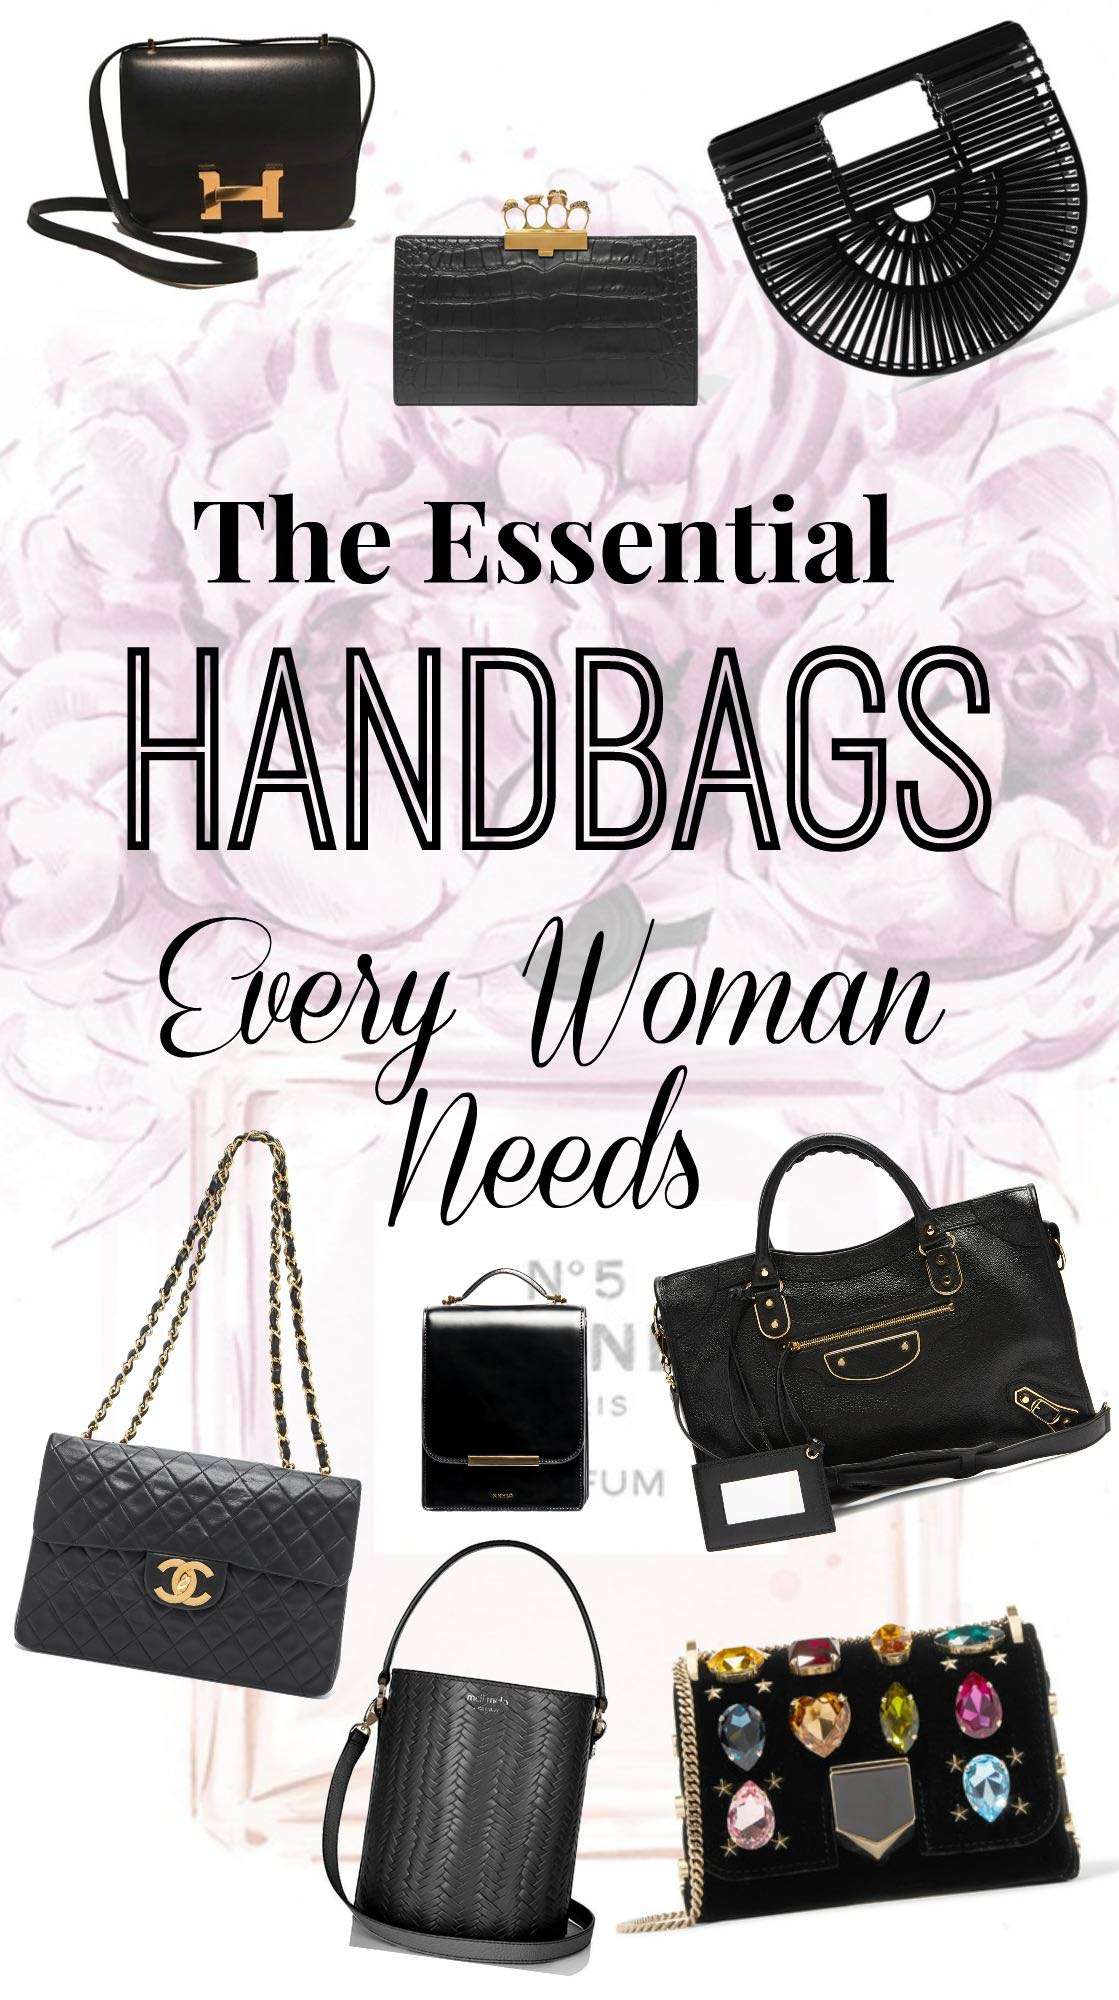 The Essential Handbags Every Woman Needs